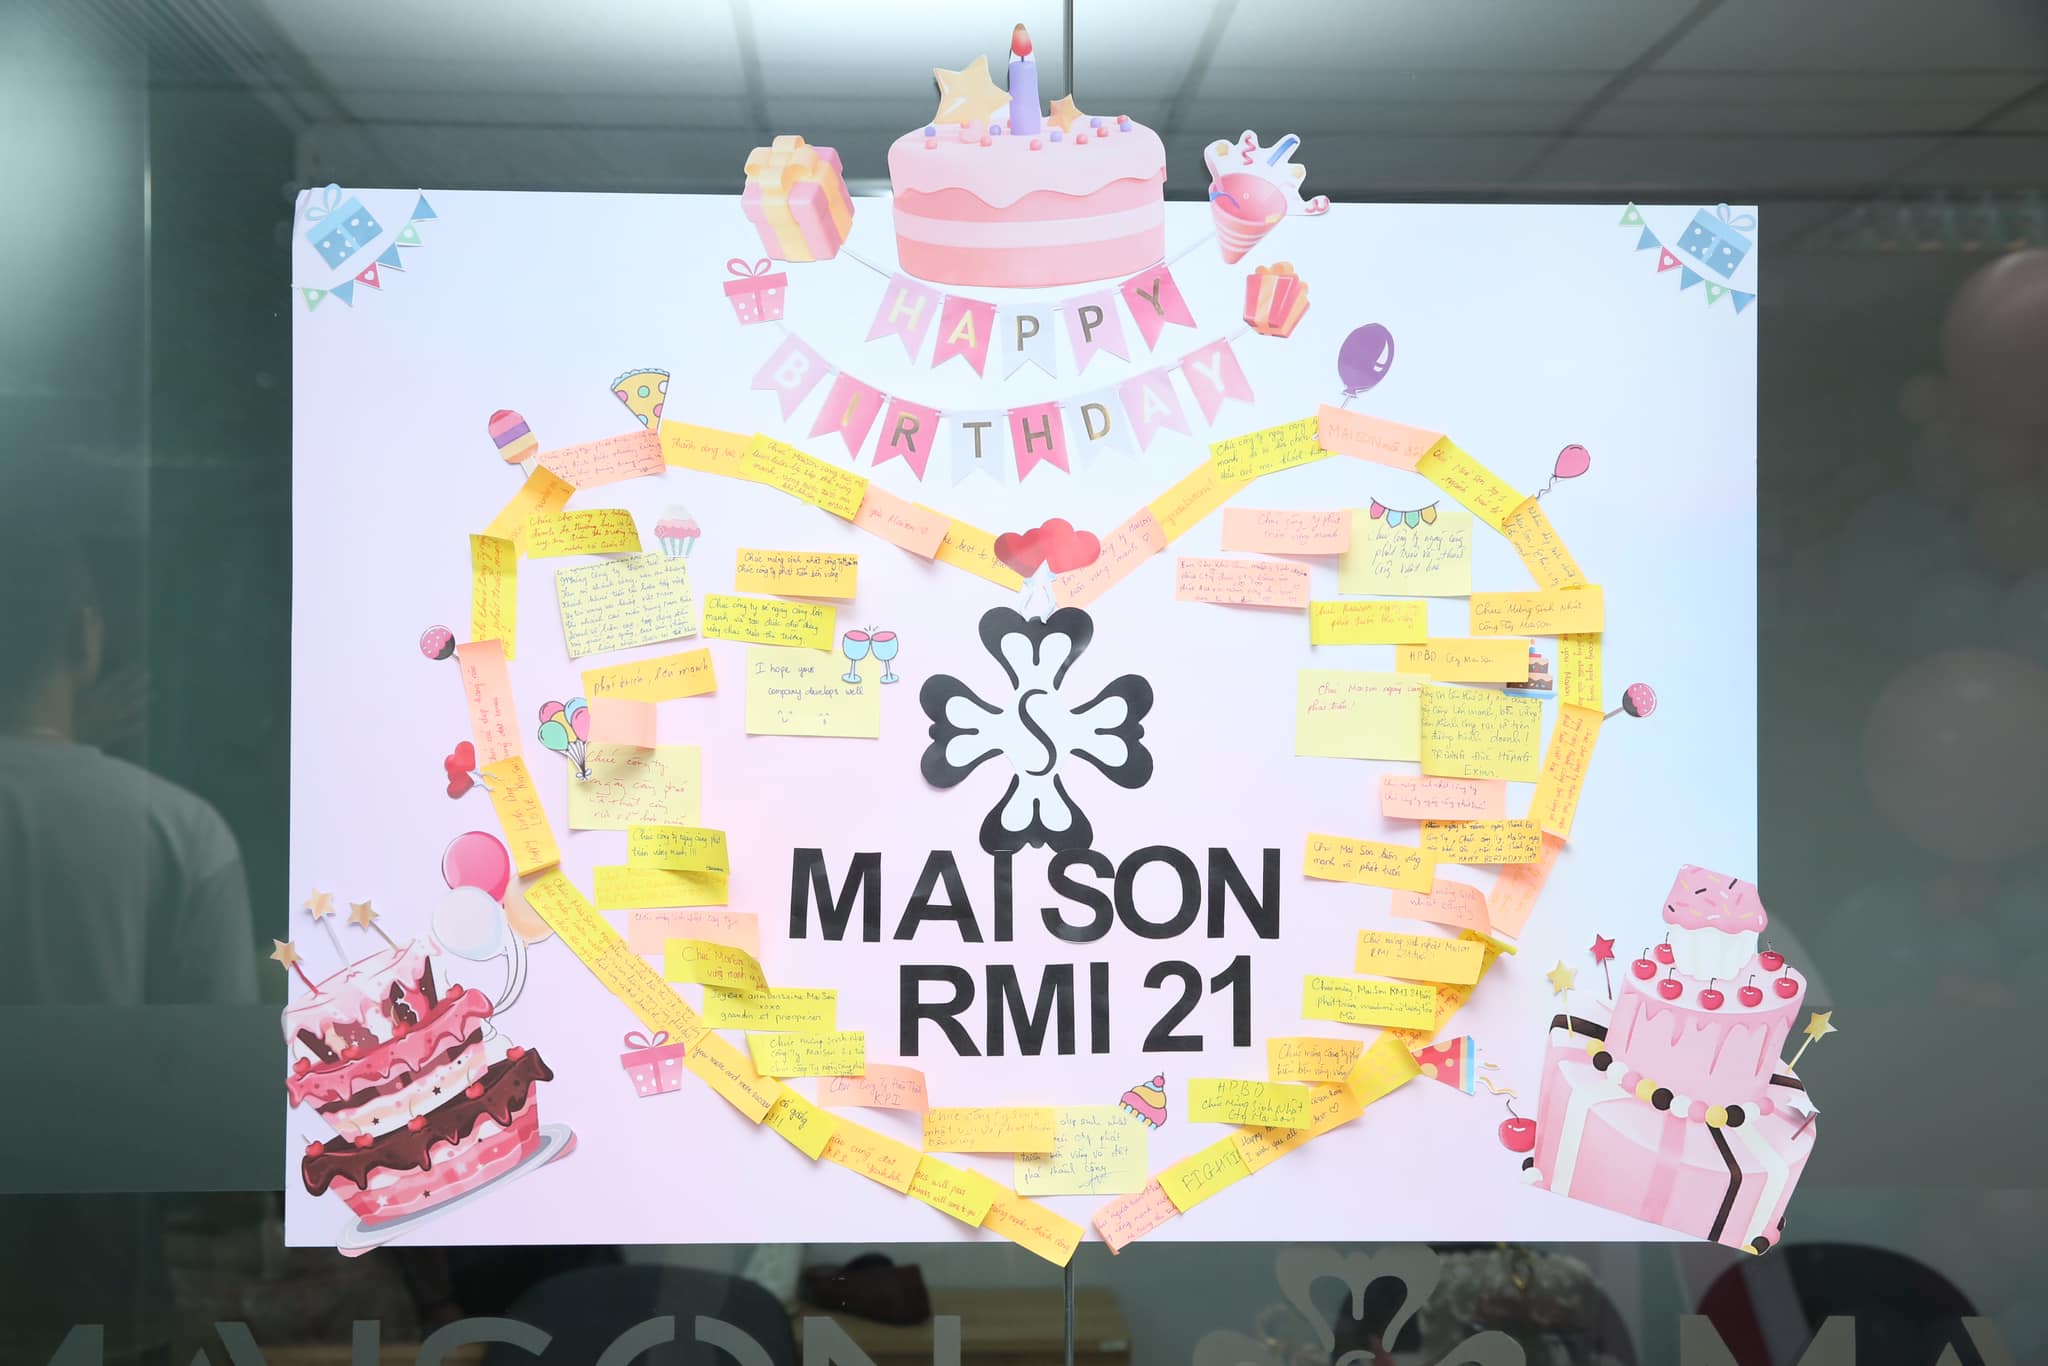 Happy Birthday Maison RMI 21 tuoi - Hanoi 6